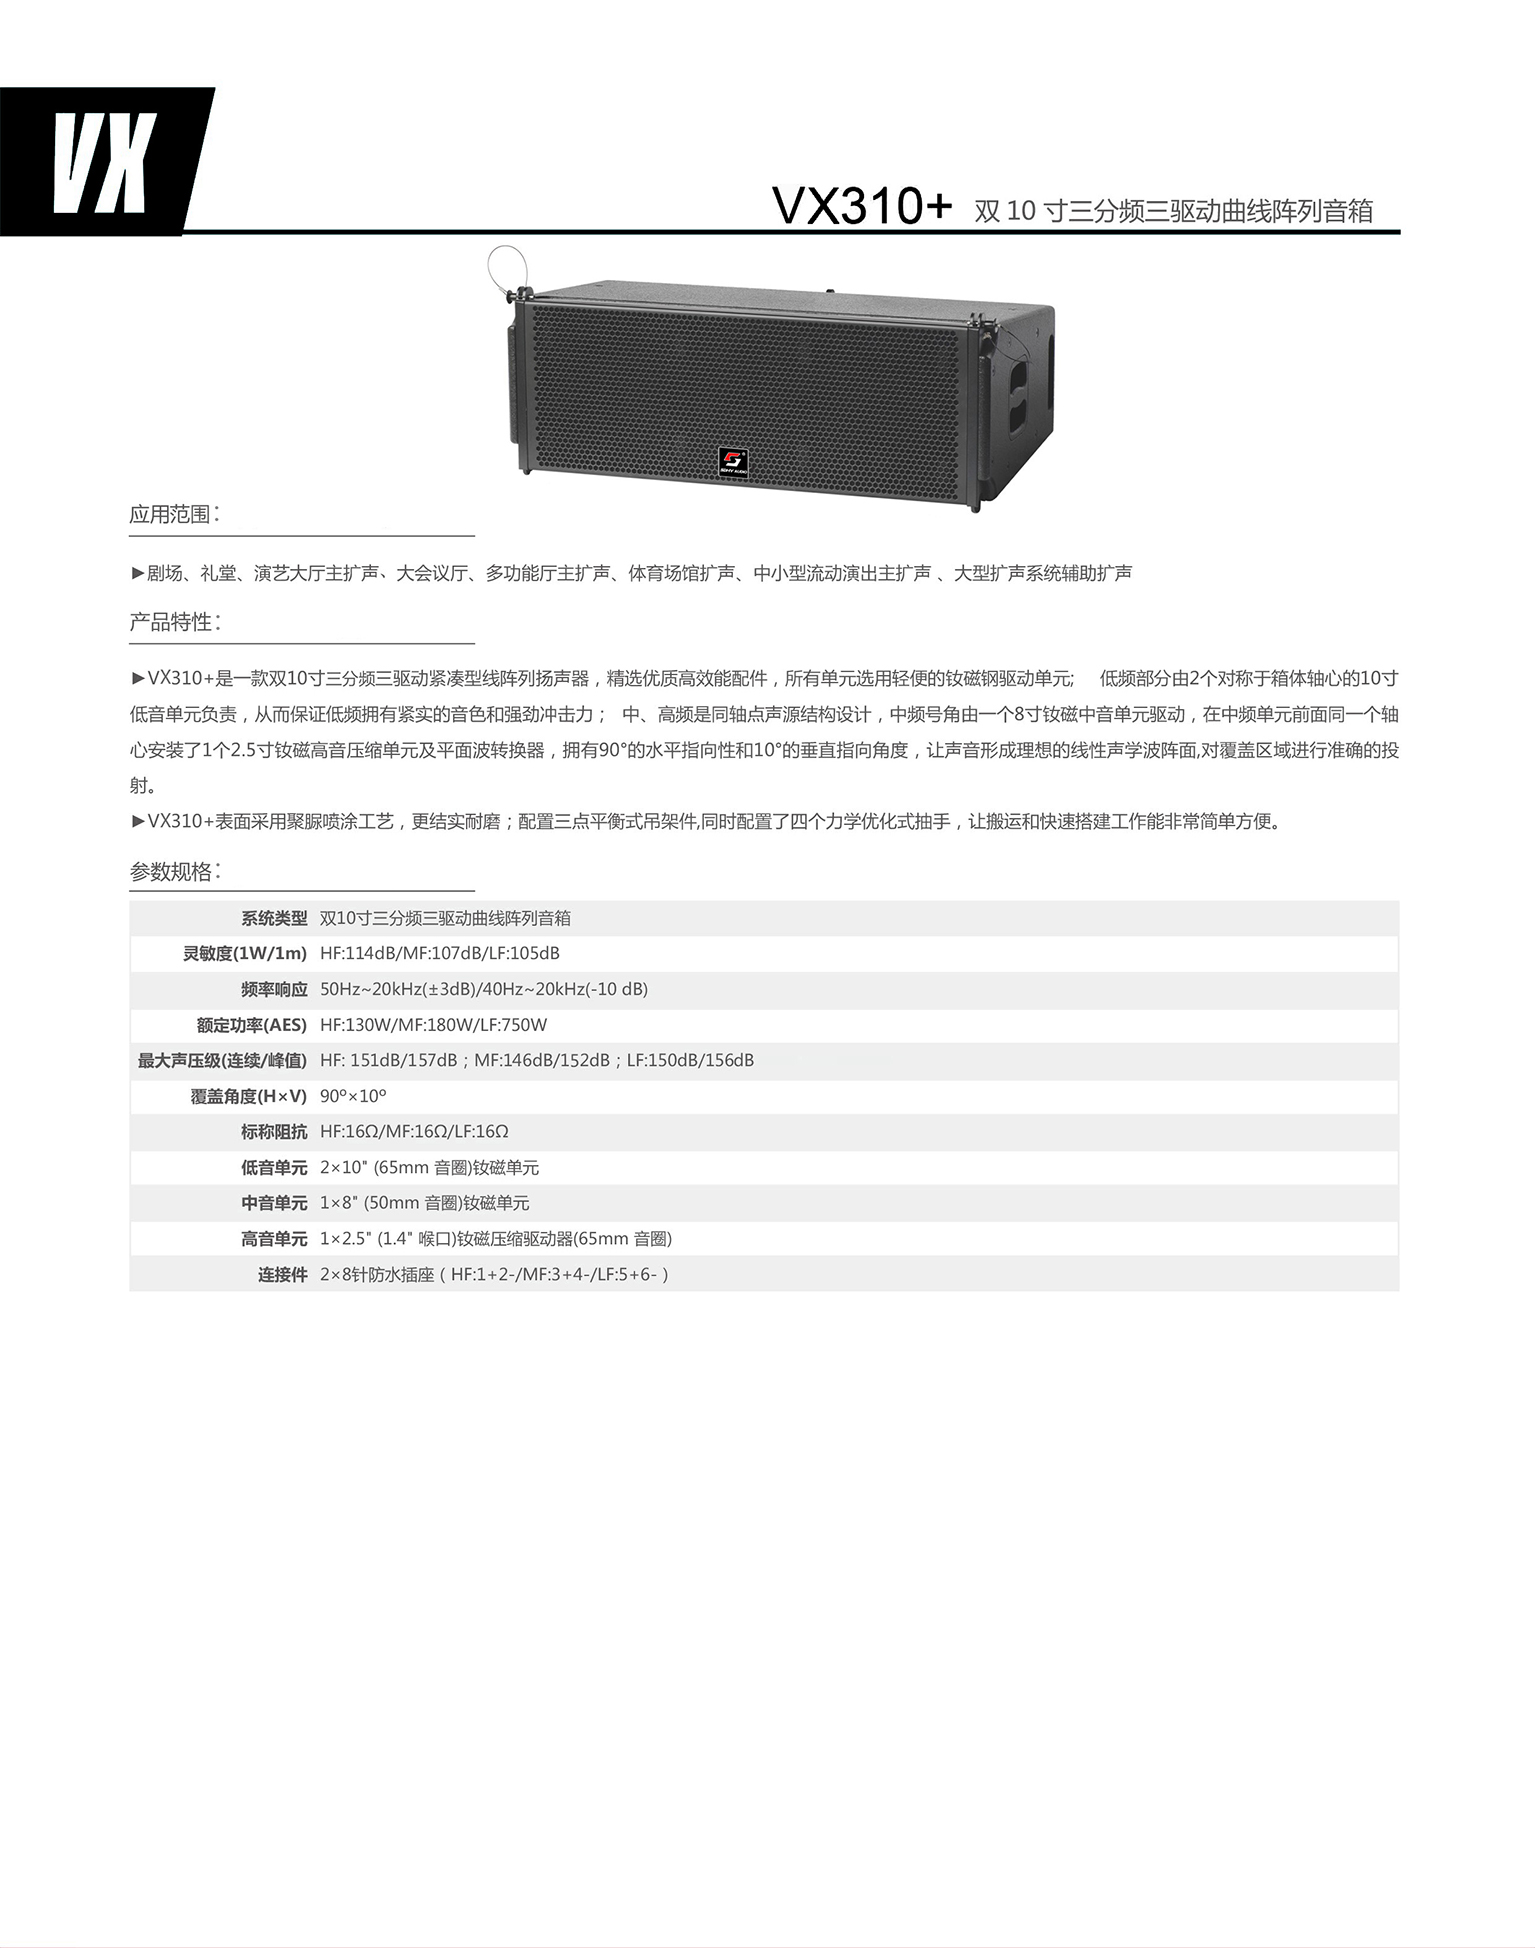 VX310+ 双10寸三分频三驱动曲线阵列音箱.jpg